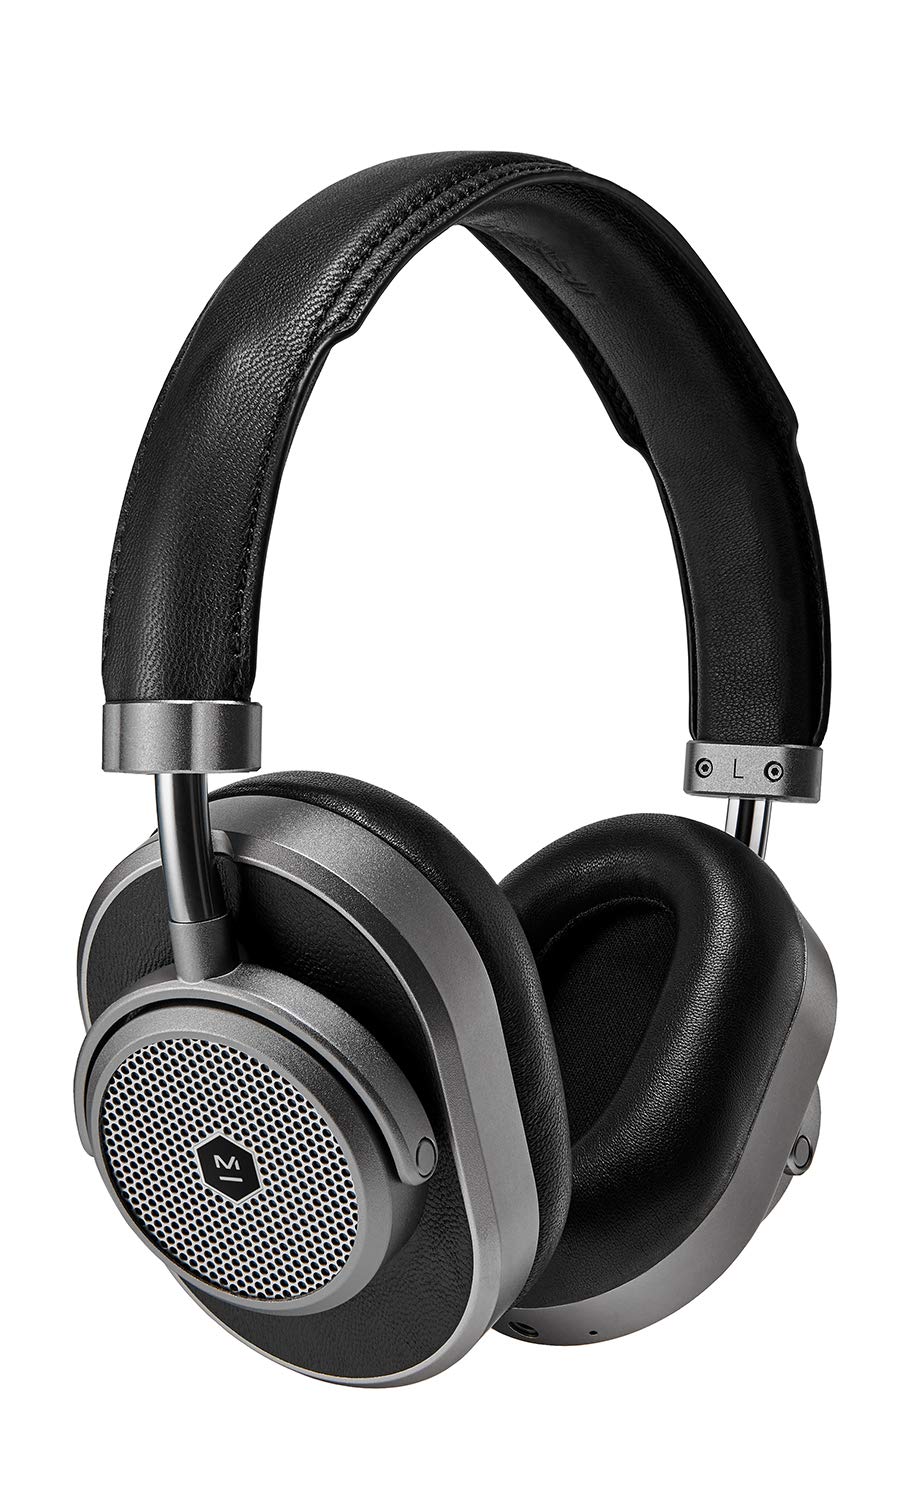 Master & Dynamic MW65 主动降噪 (Anc) 无线耳机 – 带麦克风的蓝牙包耳式耳机 – 青铜色/黑色皮革